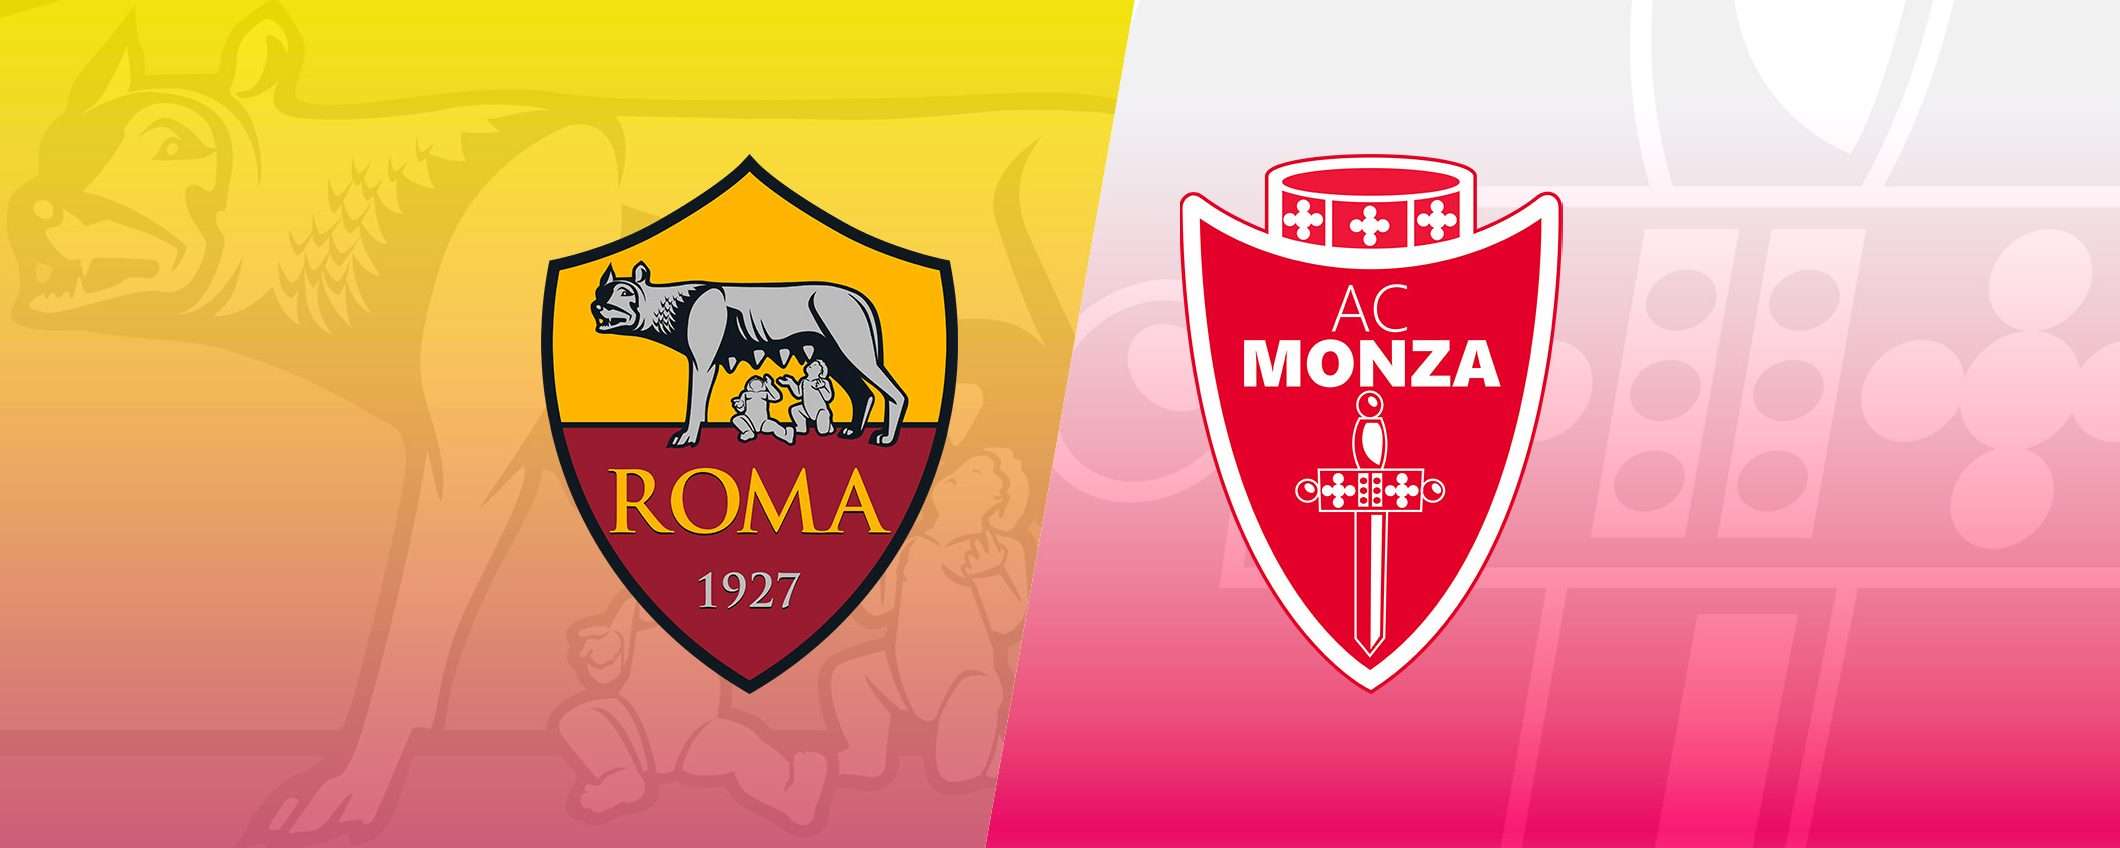 Come vedere Roma-Monza in streaming (Serie A)